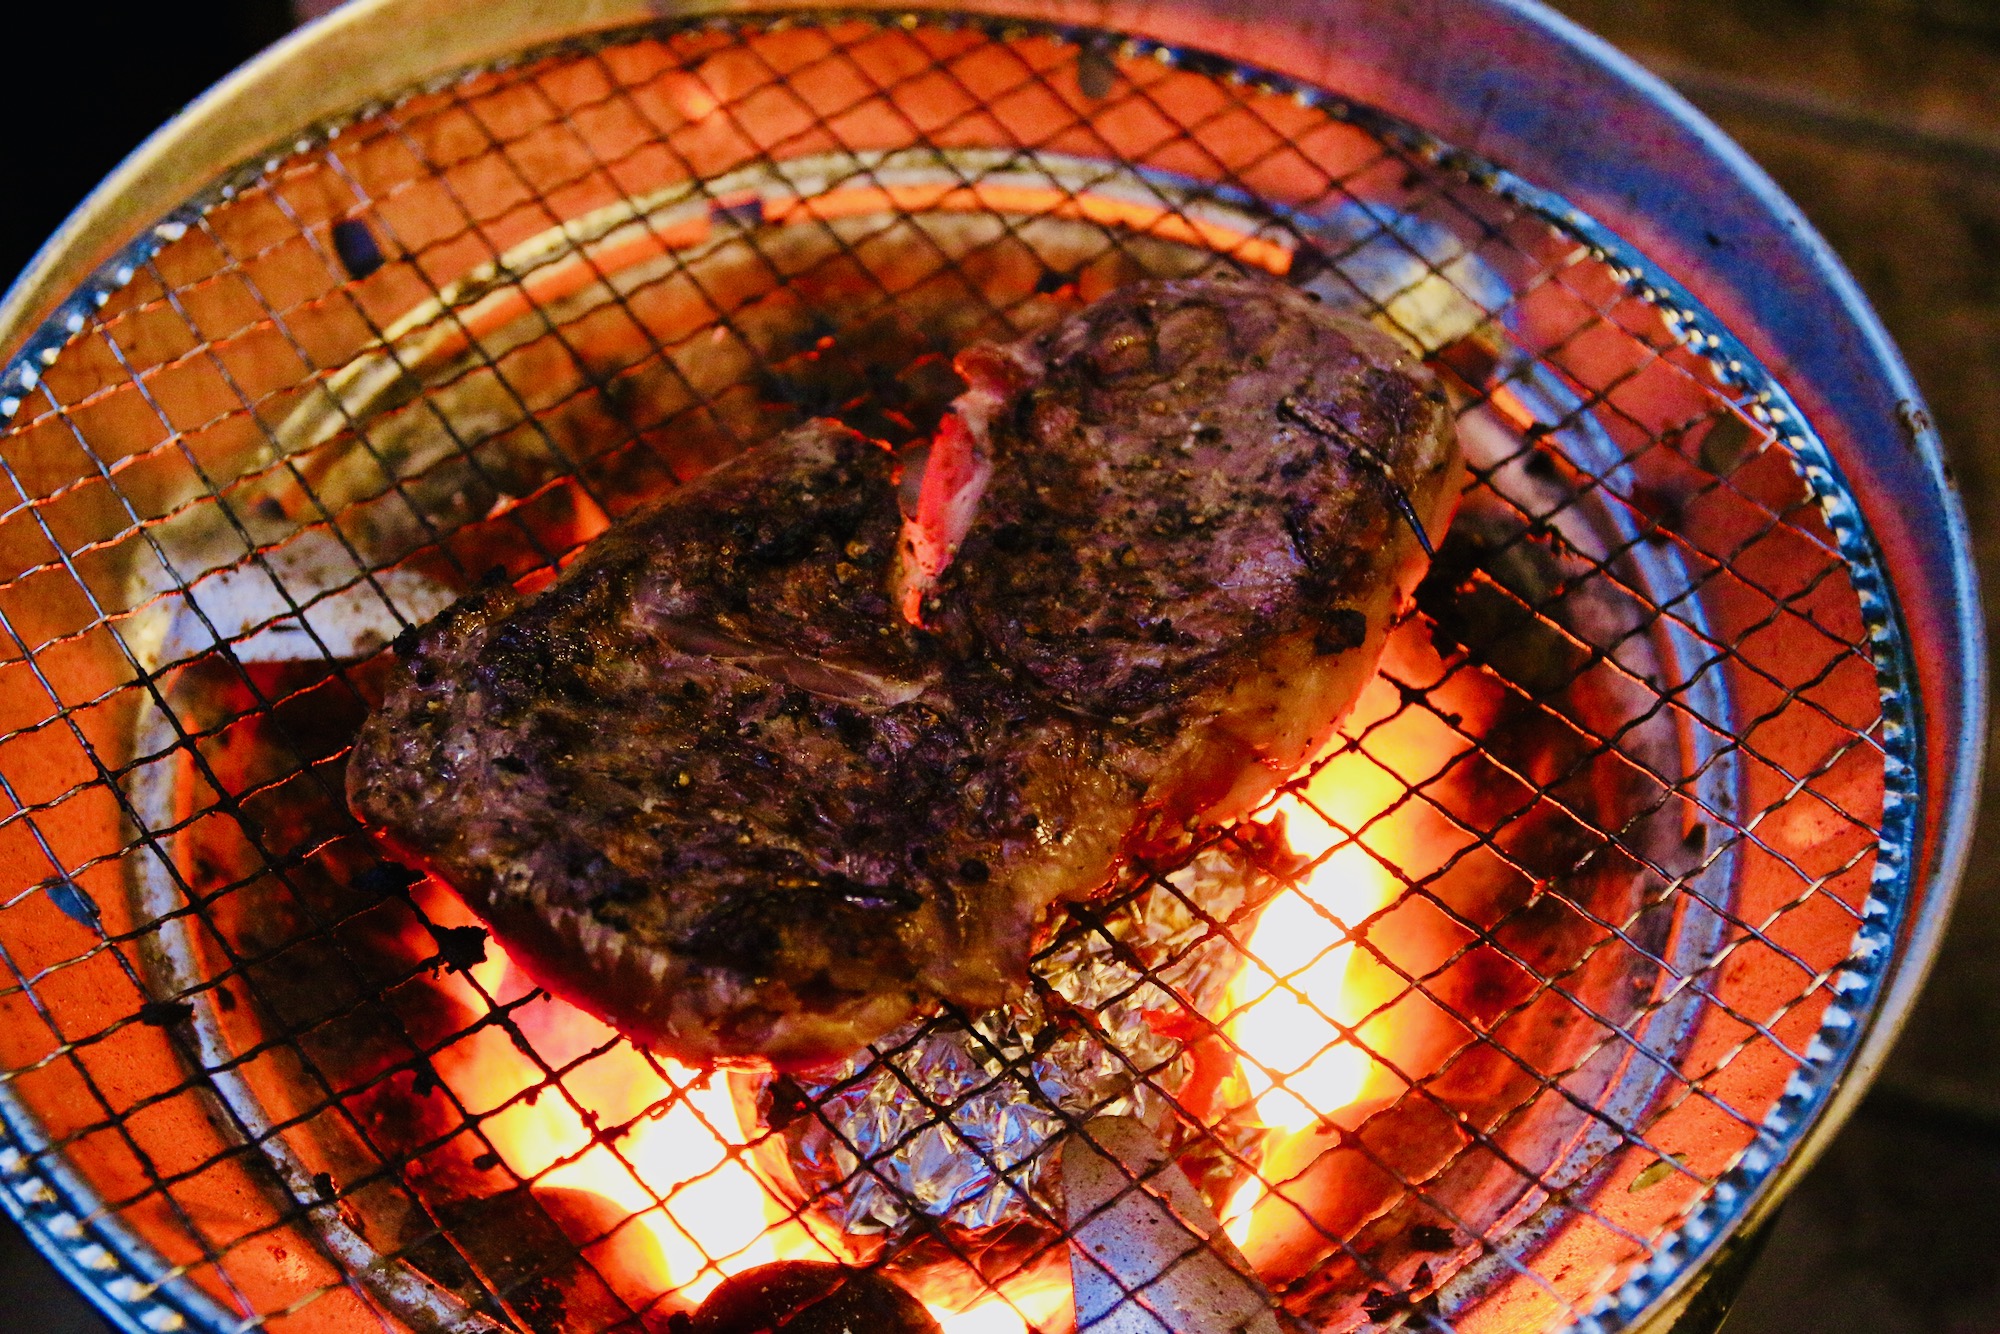 20200506七輪祭り3:Steak&Prawns